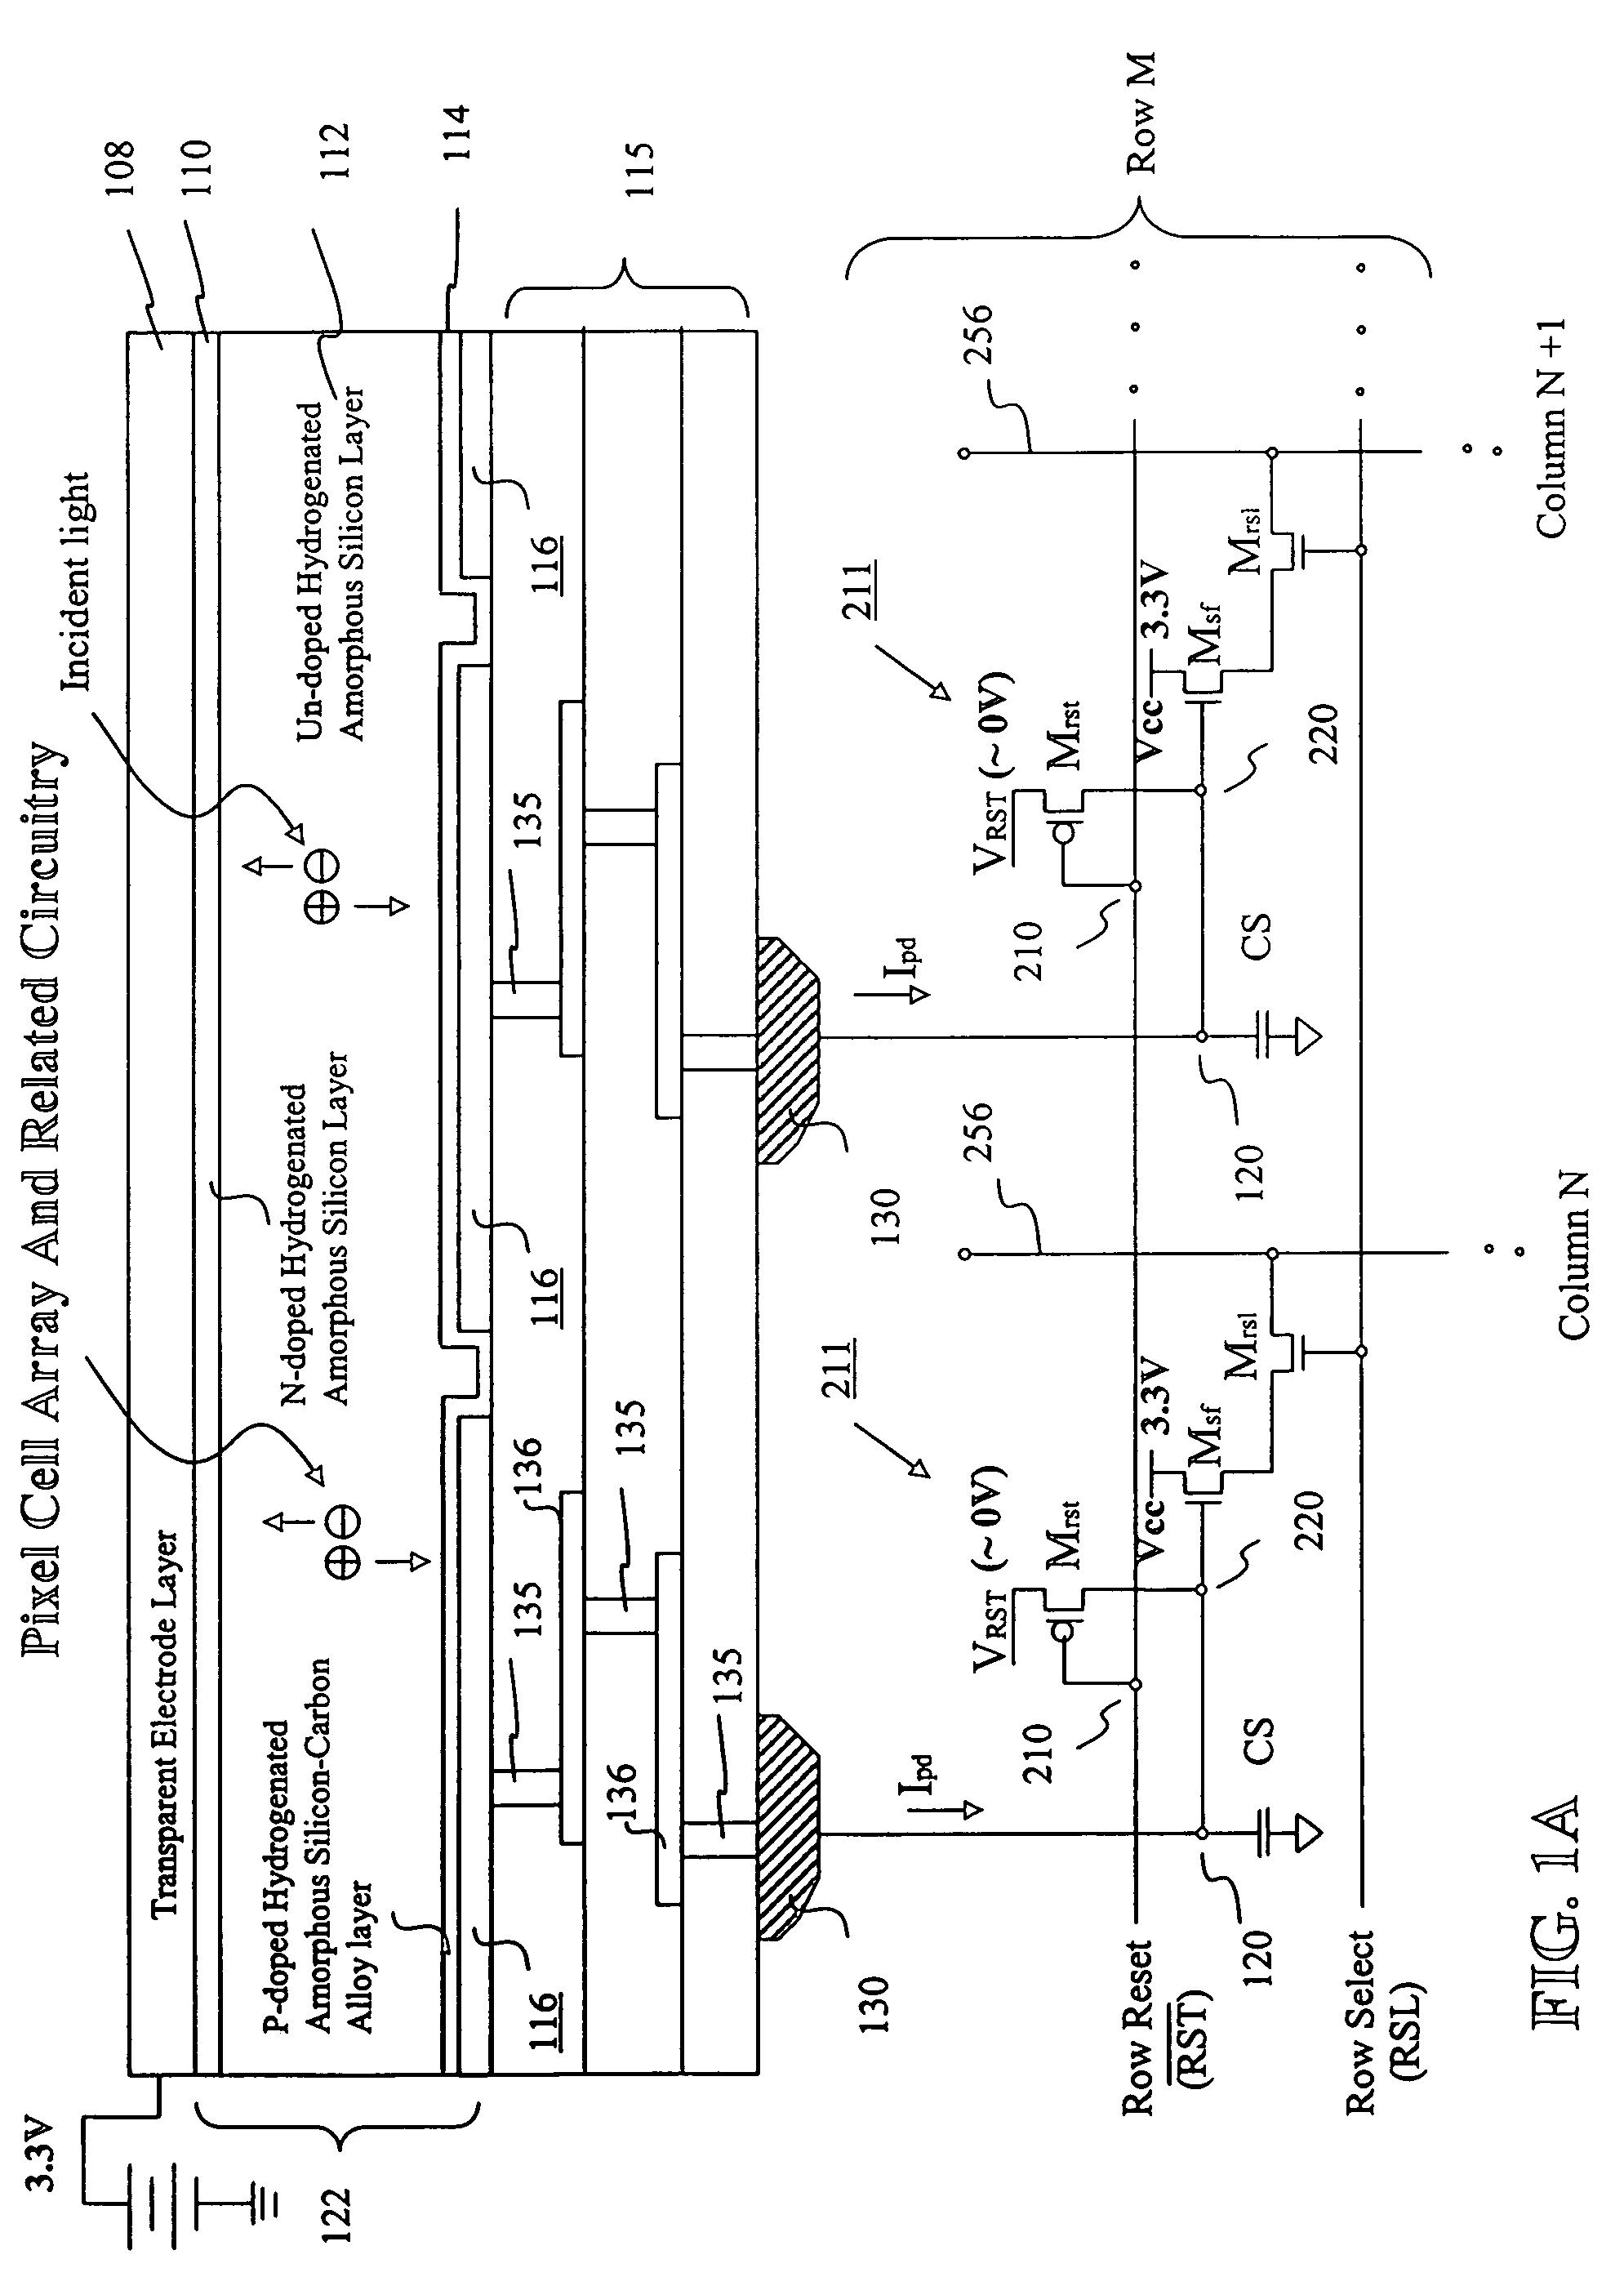 Image sensor with microcrystalline germanium photodiode layer